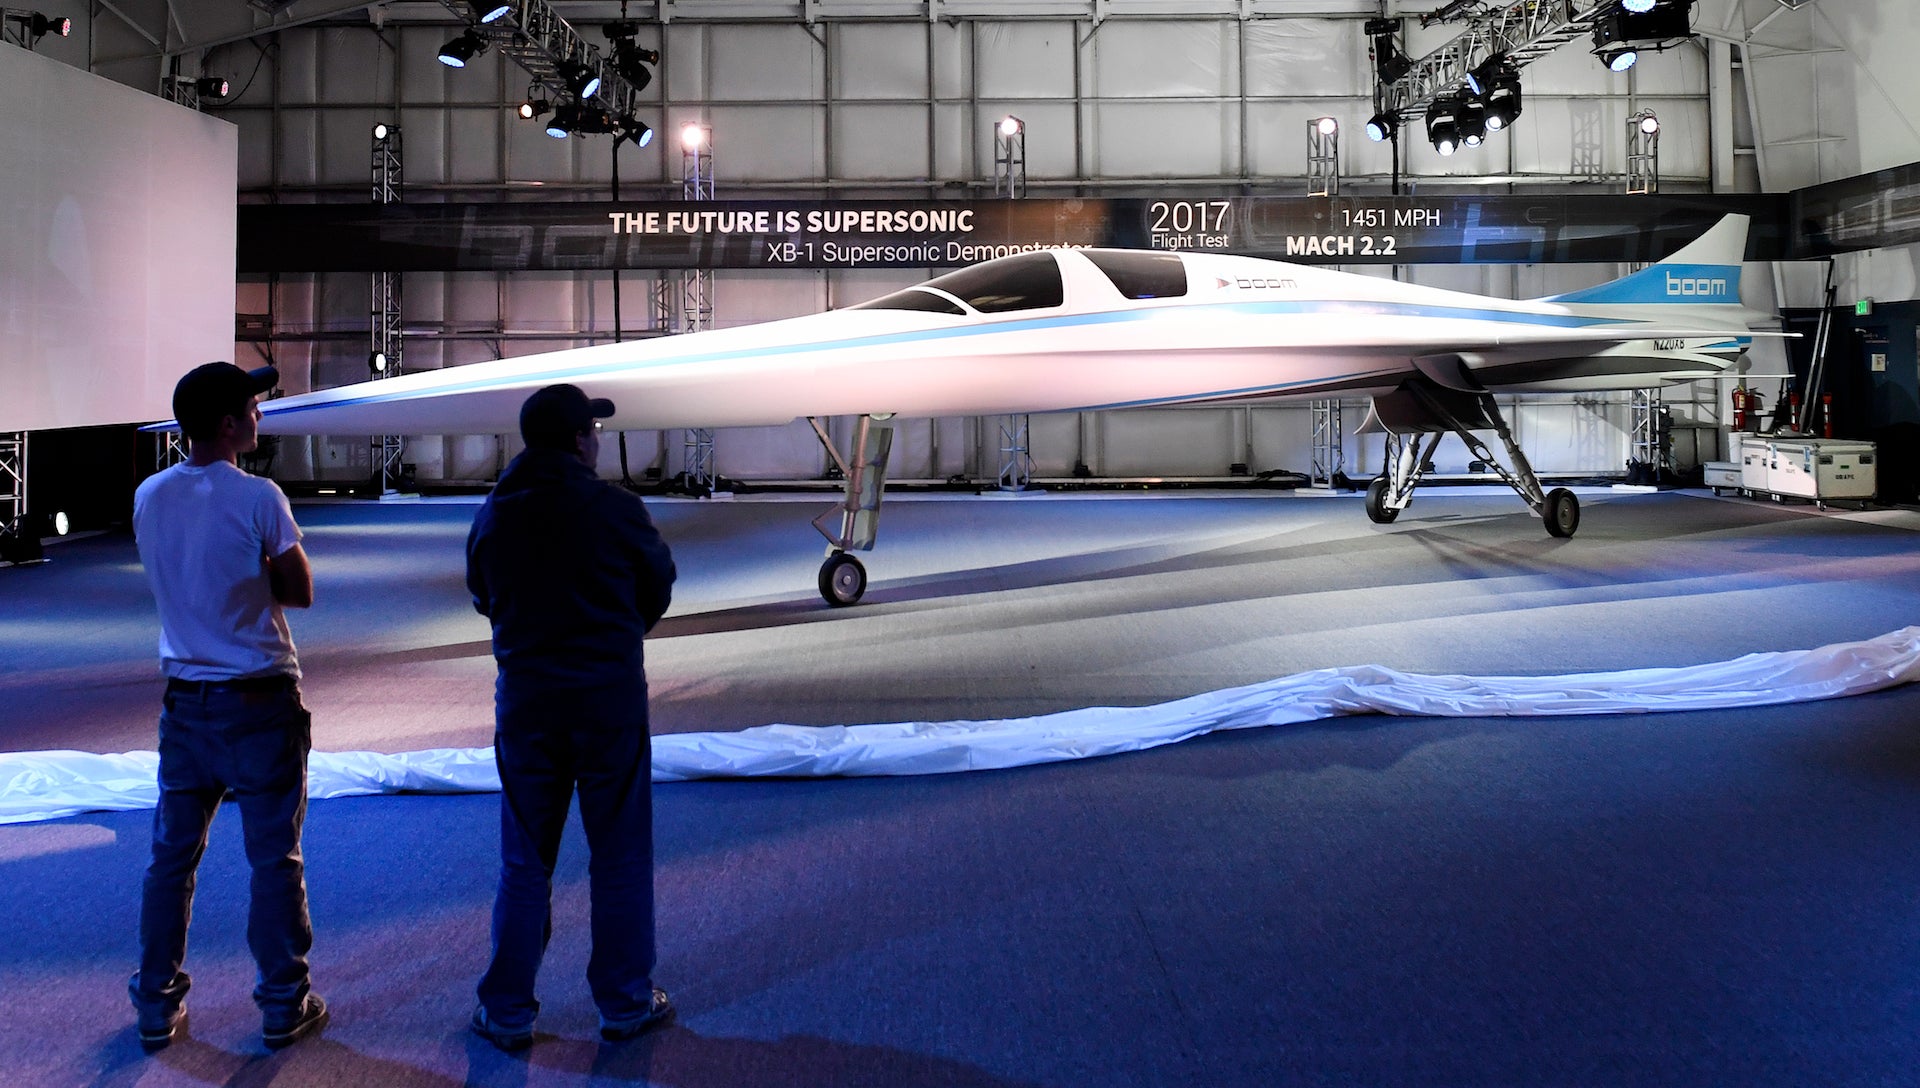 Here’s Richard Branson’s New Concorde-Inspired Supersonic Passenger Jet